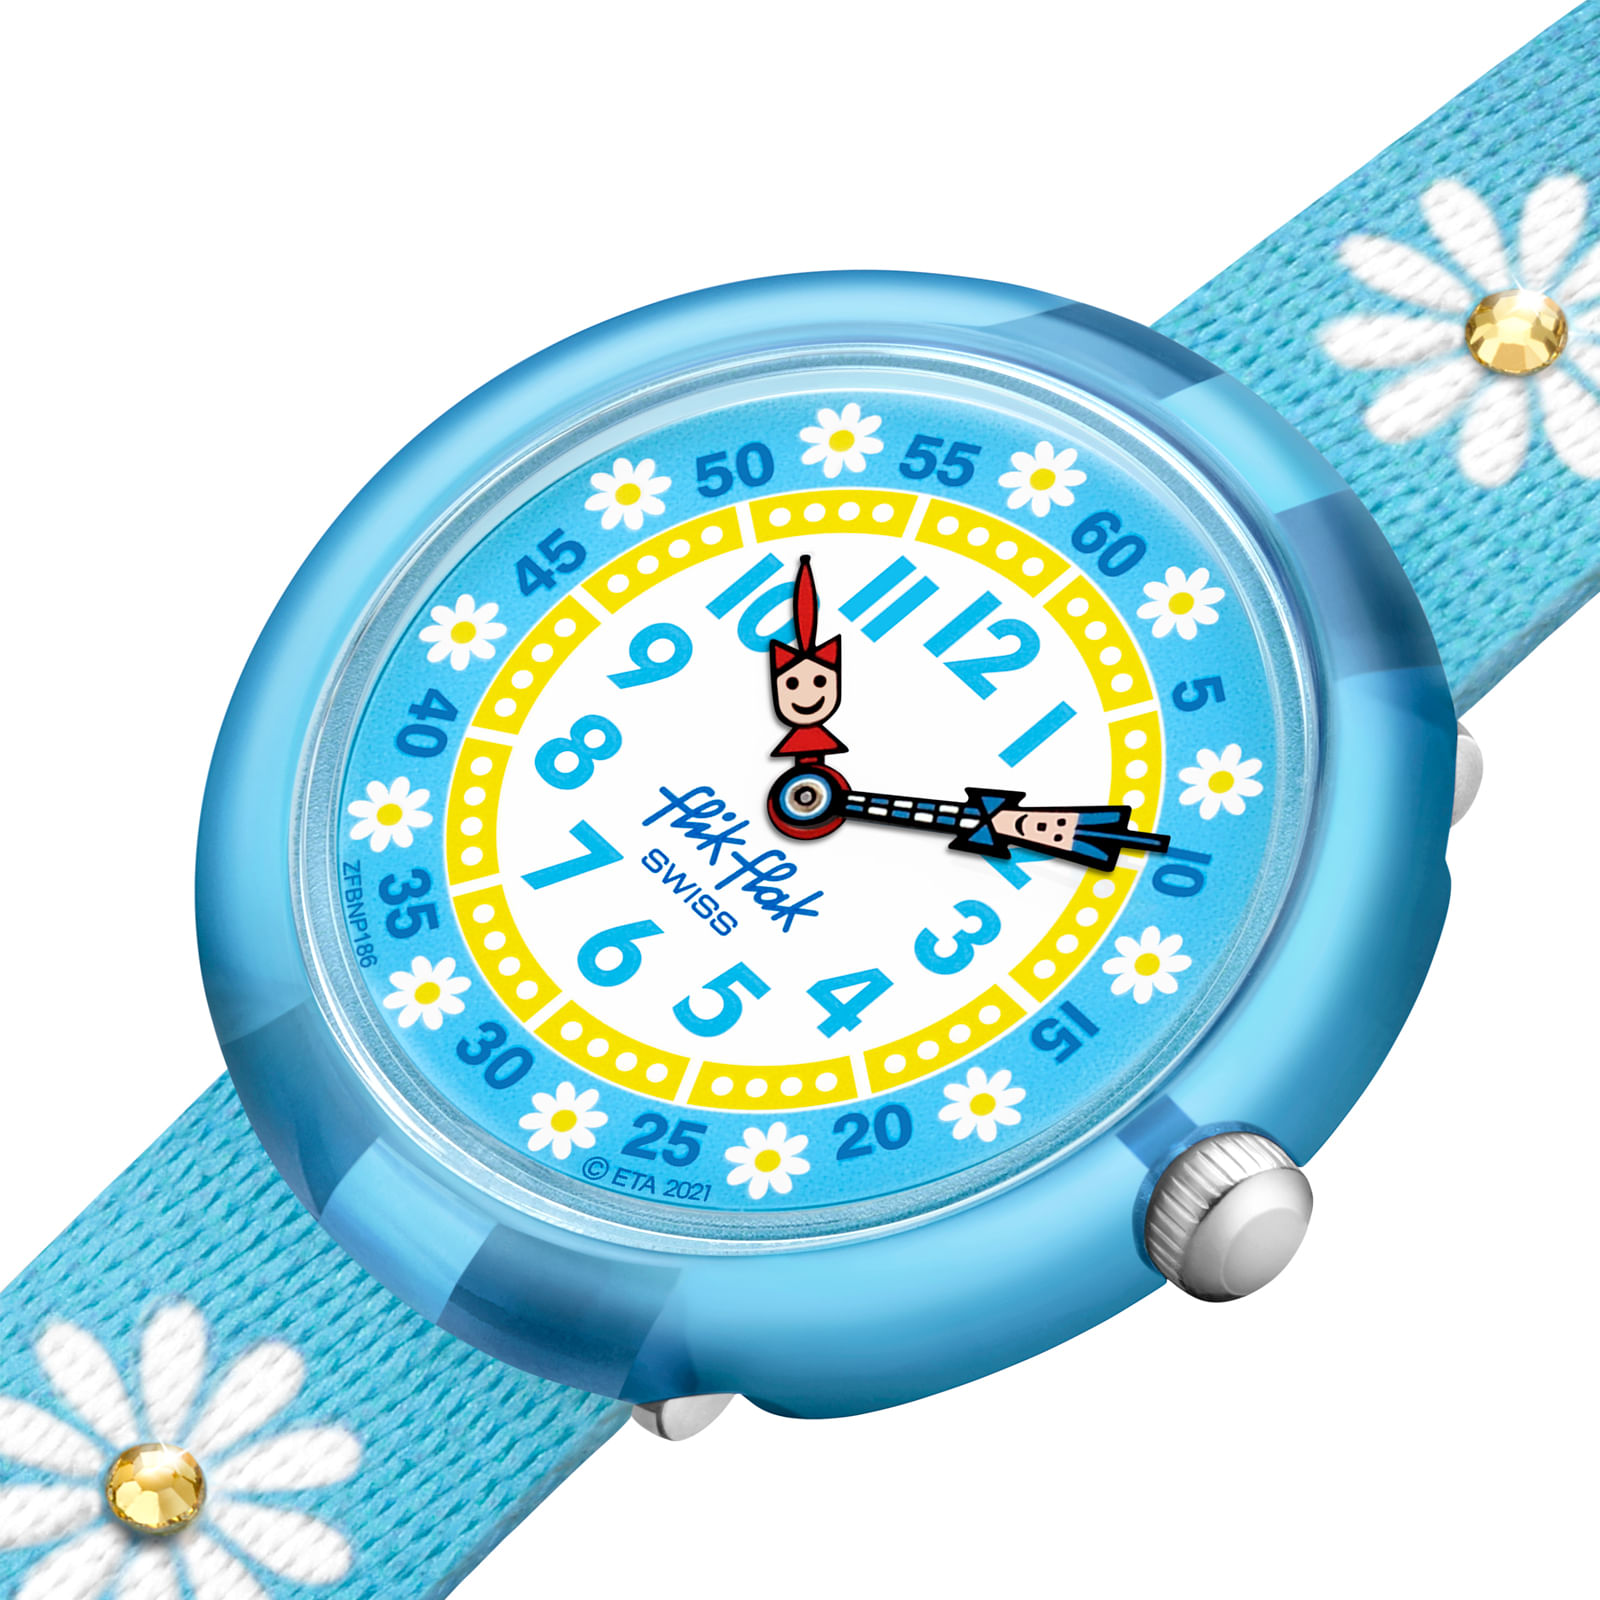 Reloj FLIK FLAK SPARKLING DAISY ZFBNP186 Niños Celeste